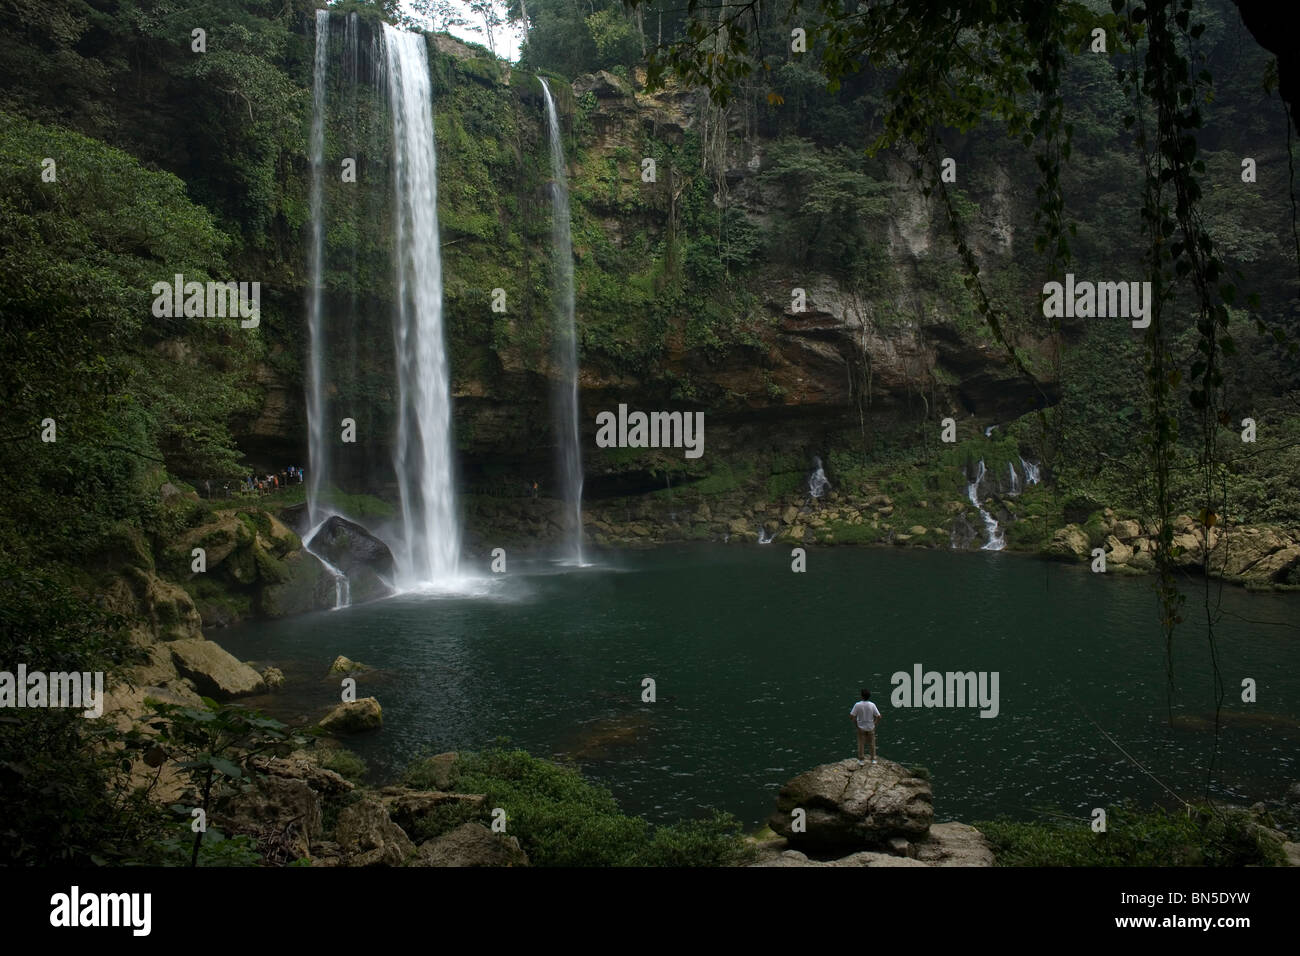 The Misol Ha waterfall in Salto de Agua, Chiapas, Mexico. Stock Photo